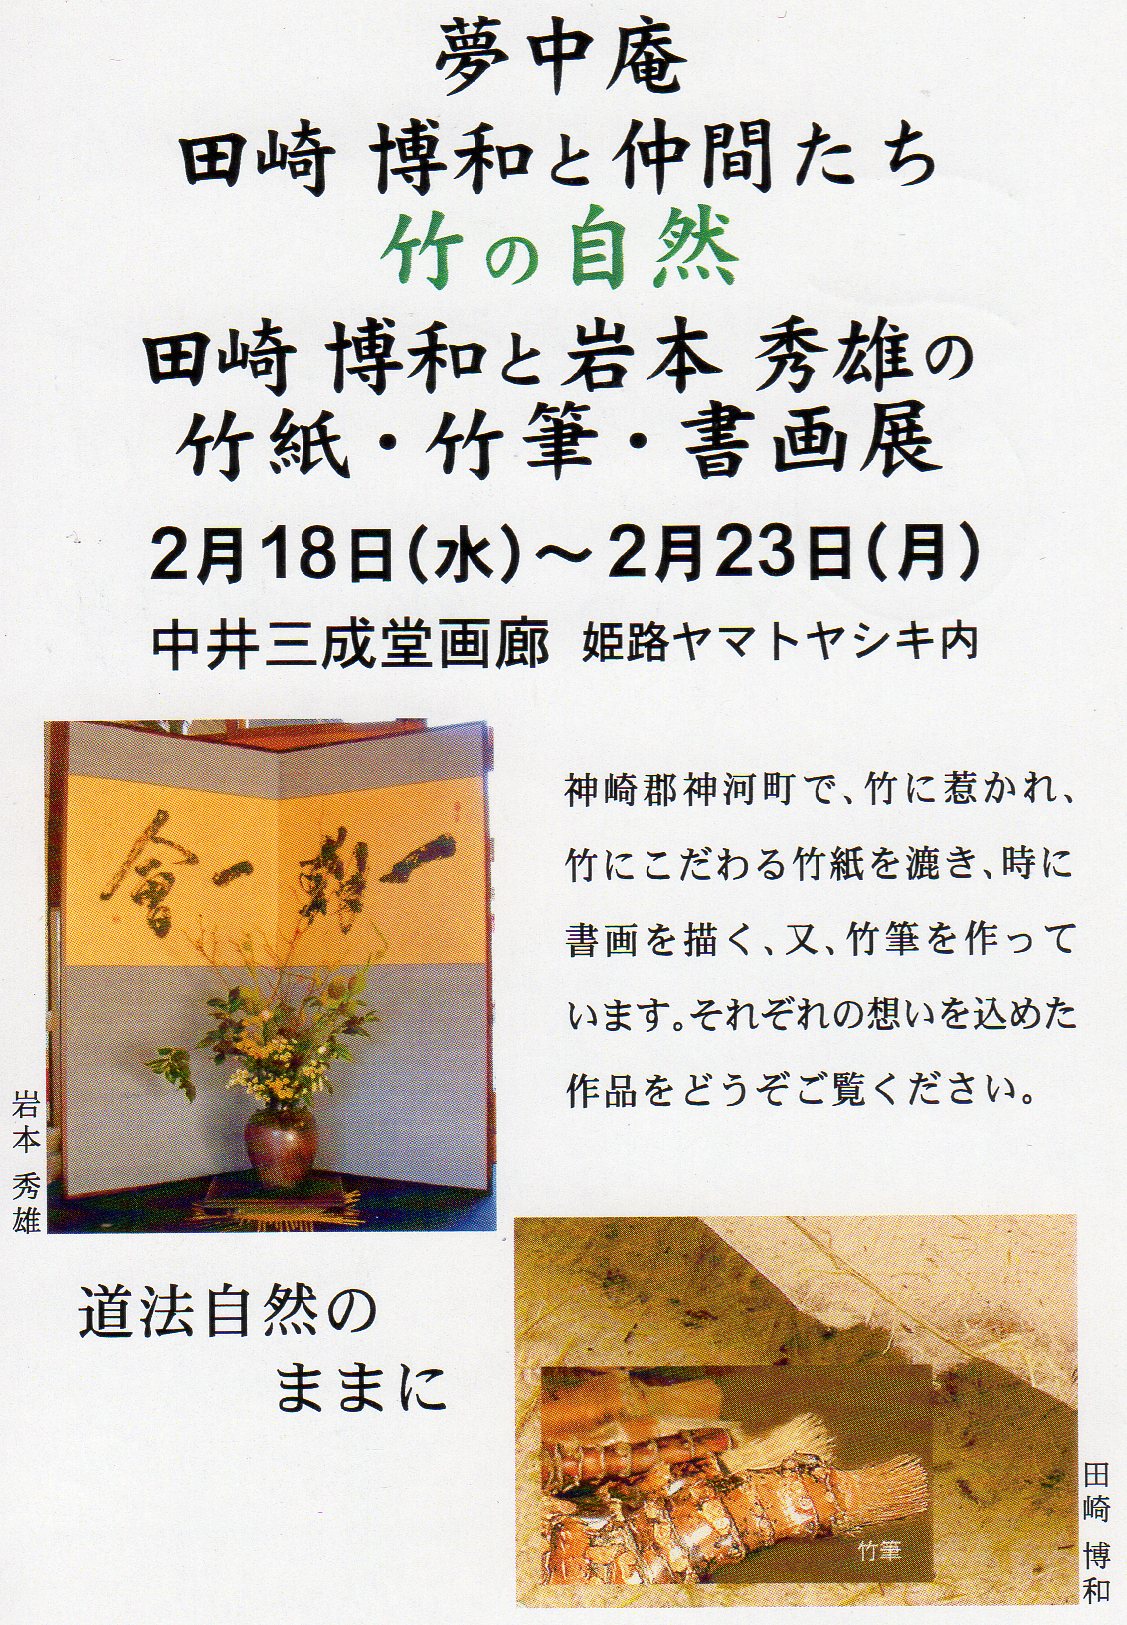 田崎博和と岩本秀雄の竹紙・竹筆・書画展